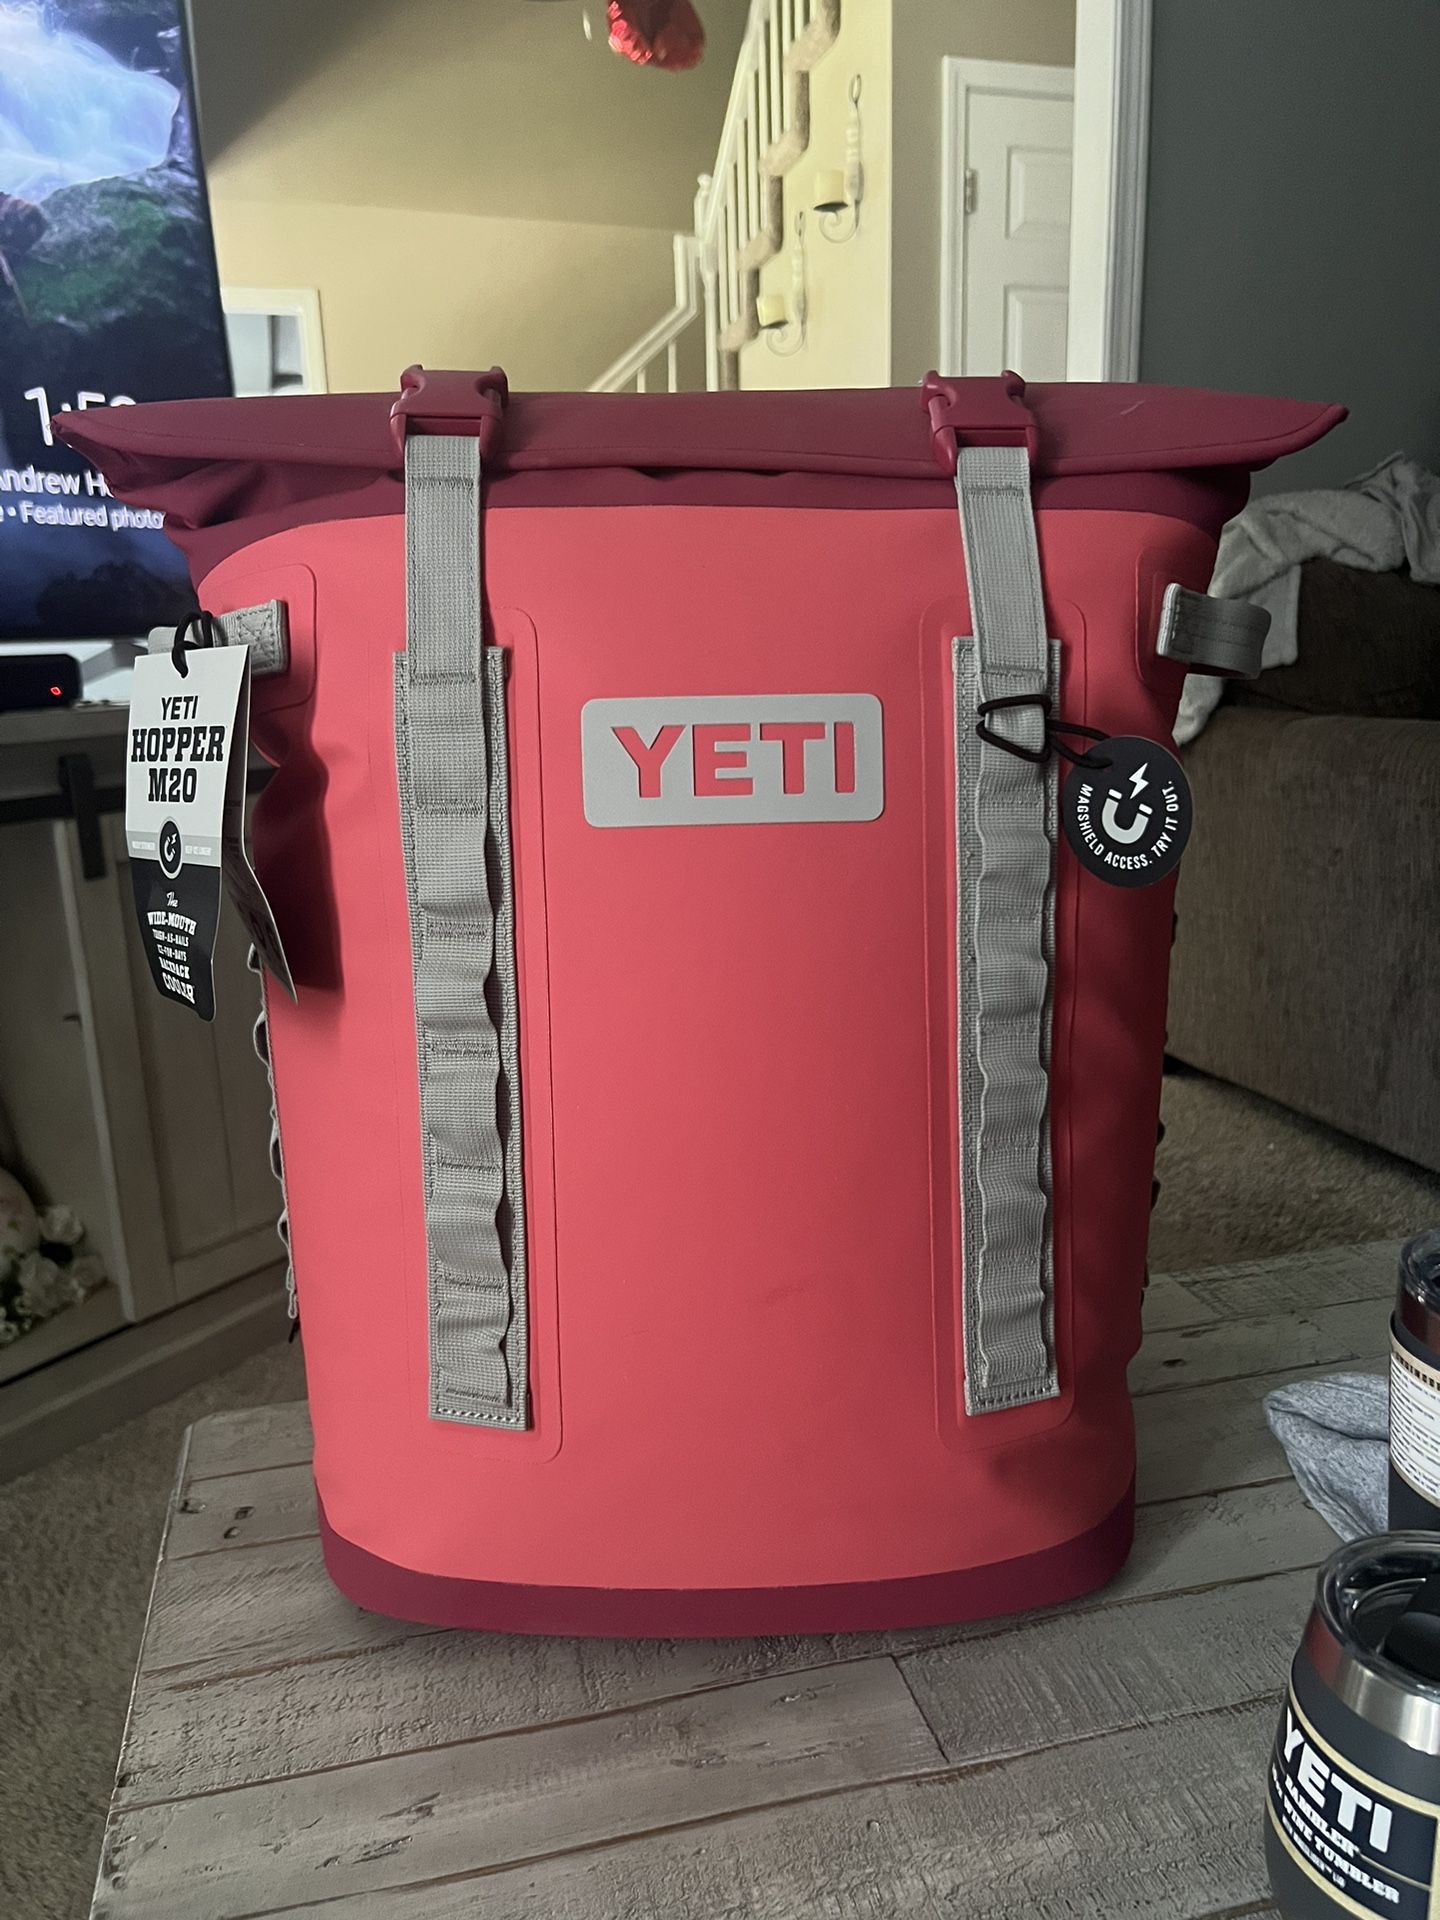 Yeti backpack Cooler Brand New 